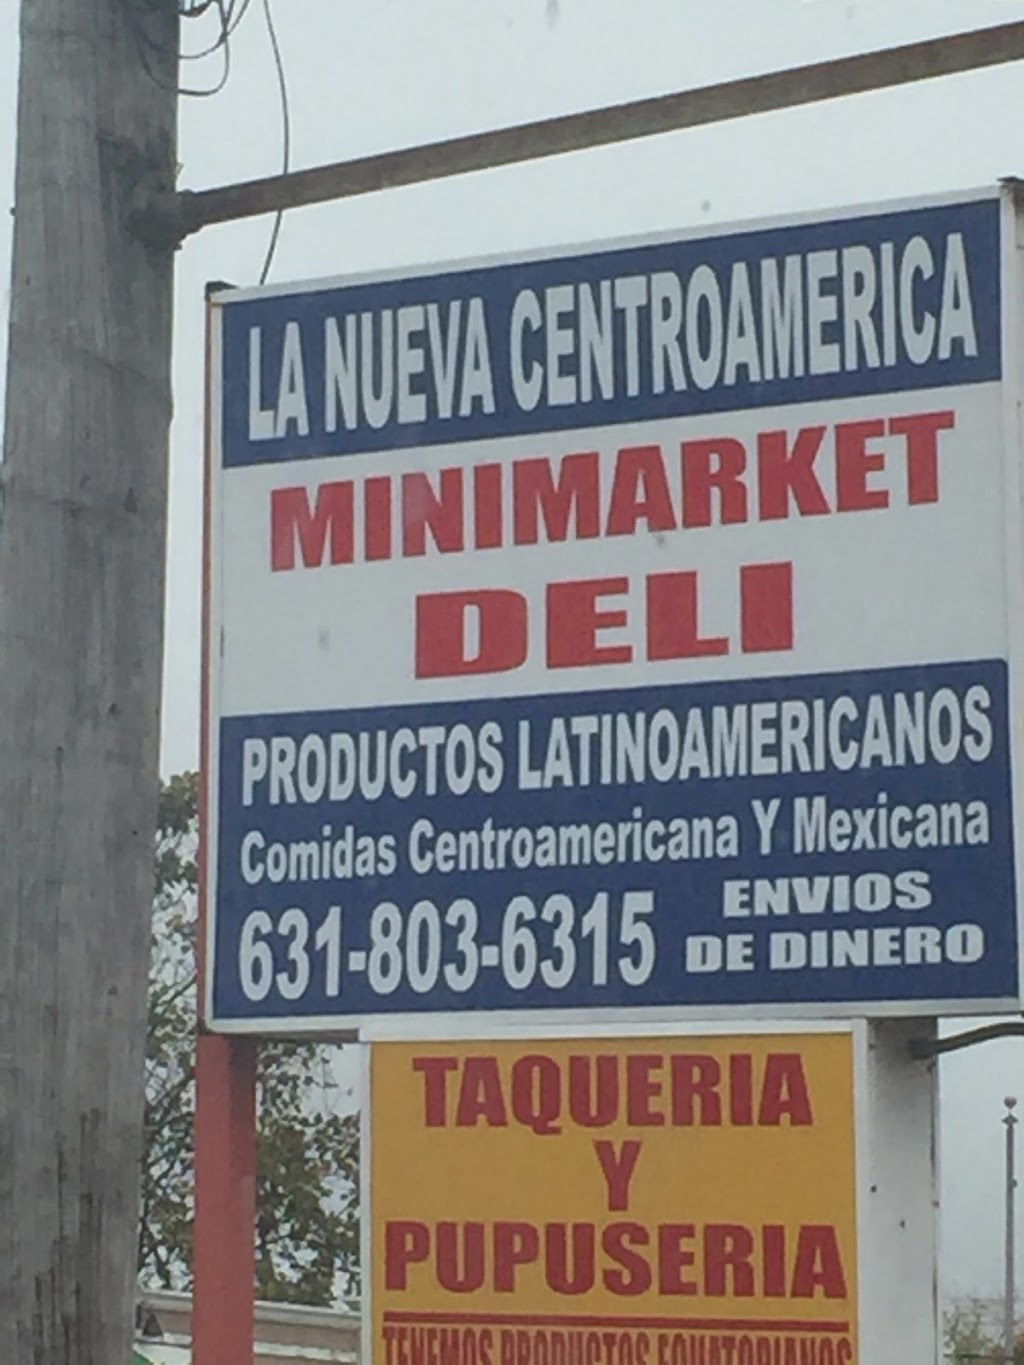 El Nuevo Centro America Mini Market | 1414 Montauk Hwy, Patchogue, NY 11772 | Phone: (631) 803-6315